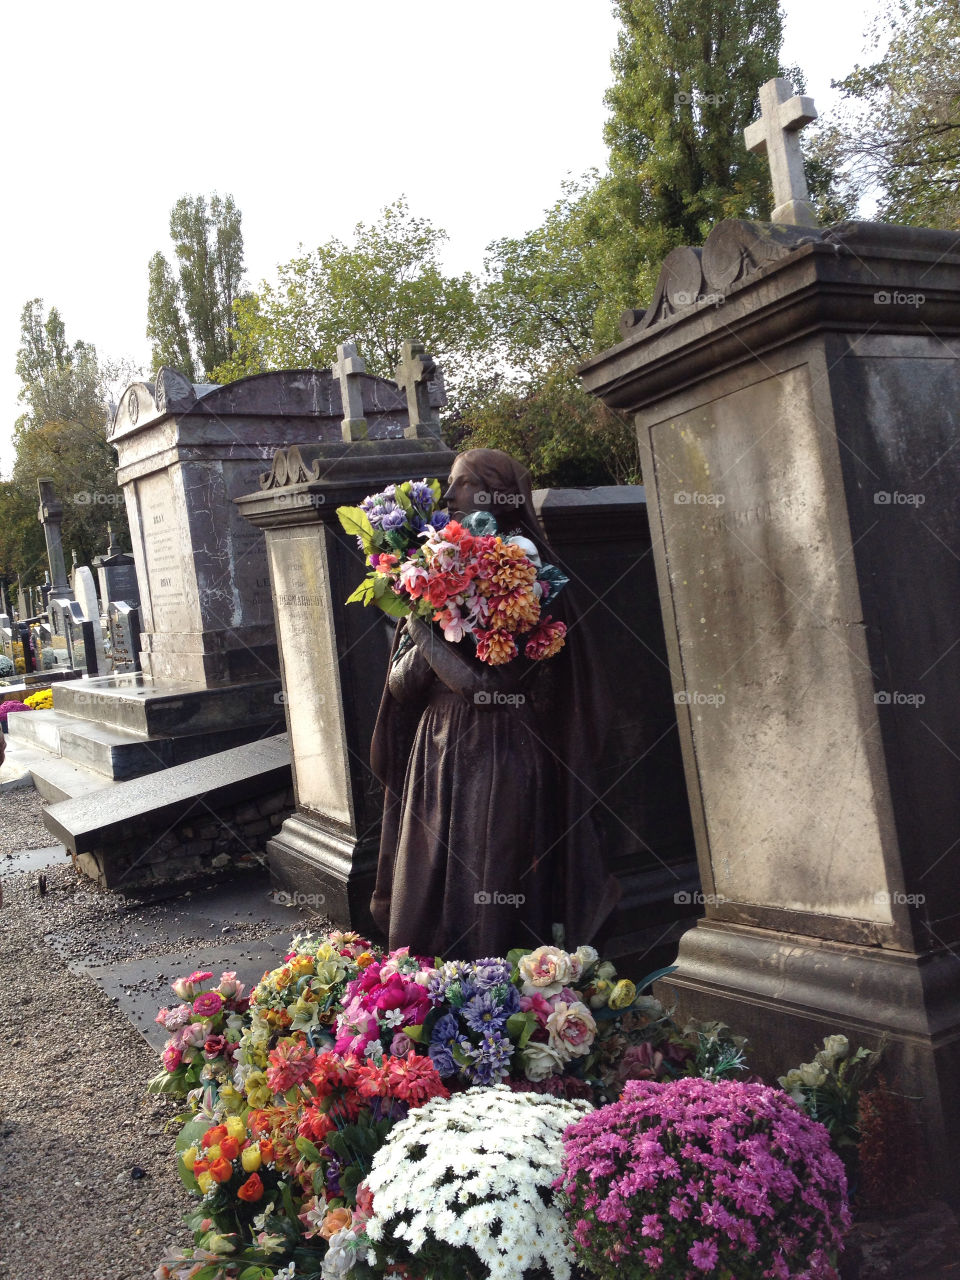 Flower, Cemetery, Grave, Garden, People